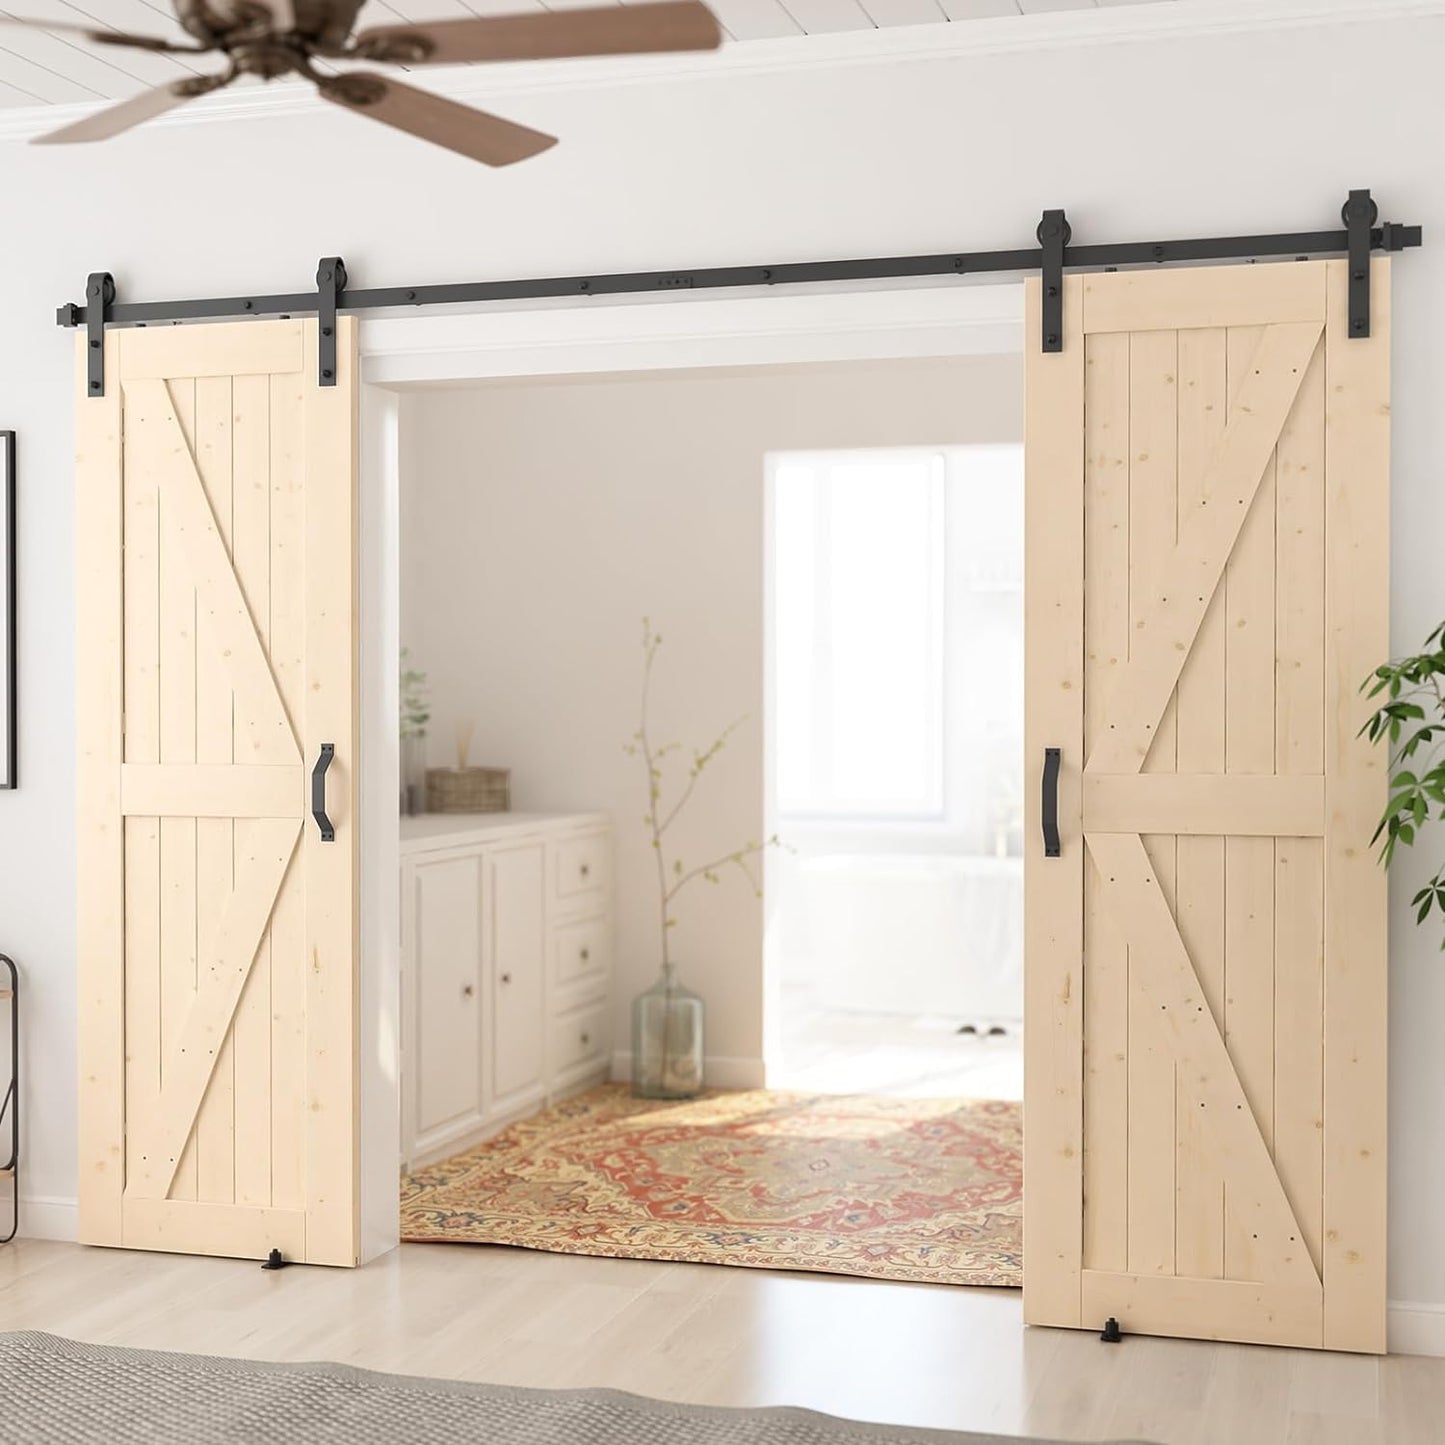 Unfinished Wood Barn Door without Installation Hardware Kit